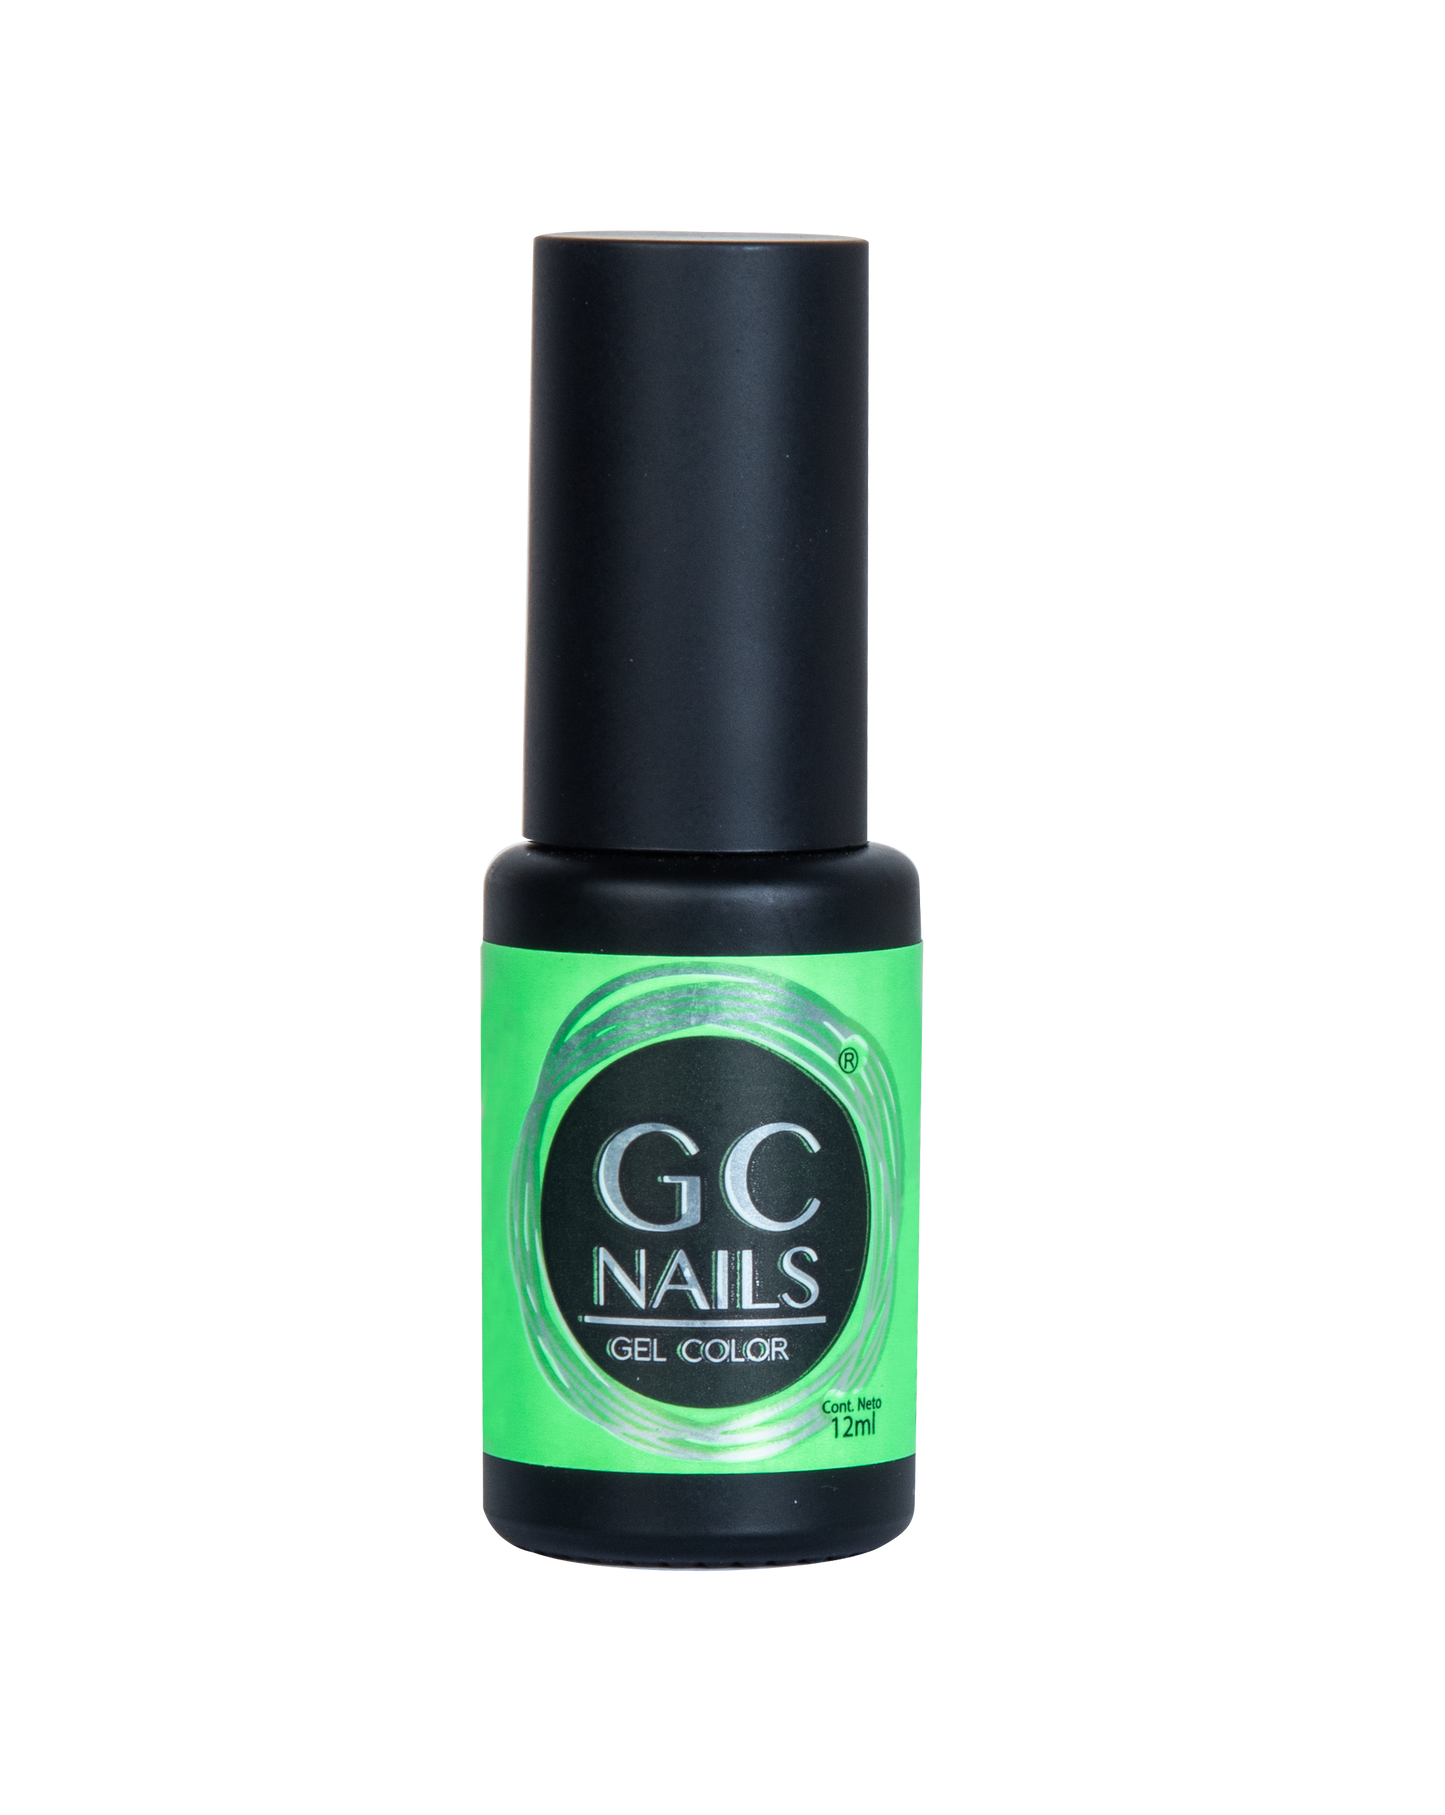 GC nails bel-color 12ml  KIWI GLOW 114